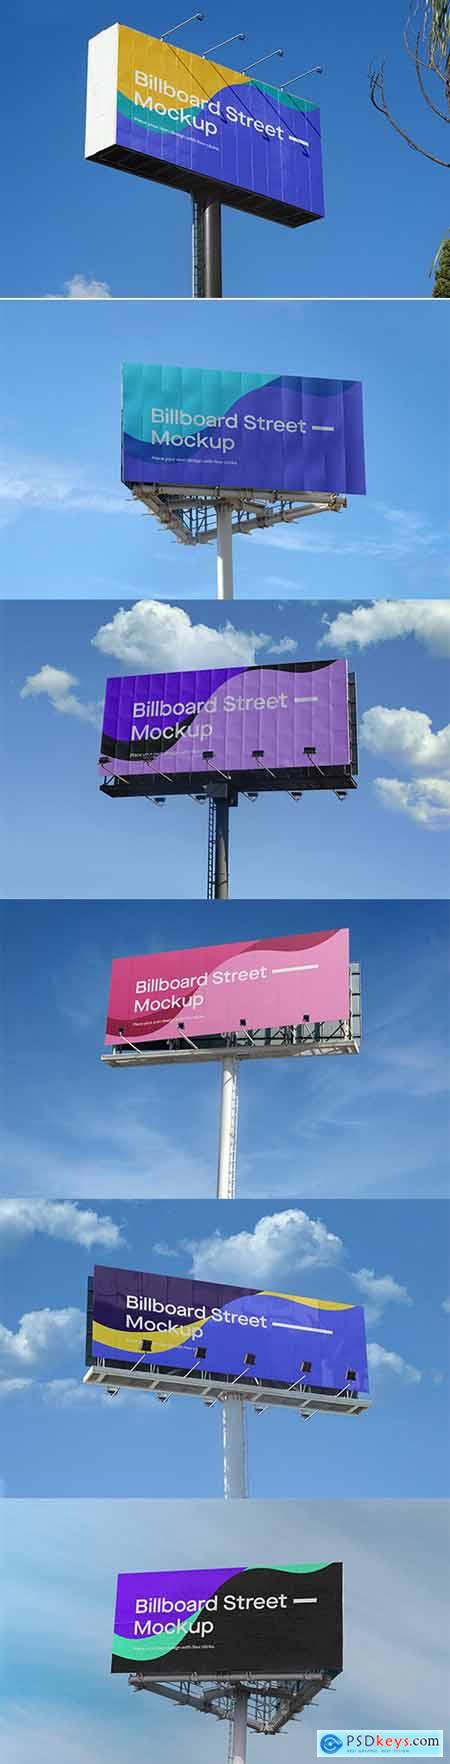 Billboard mockup